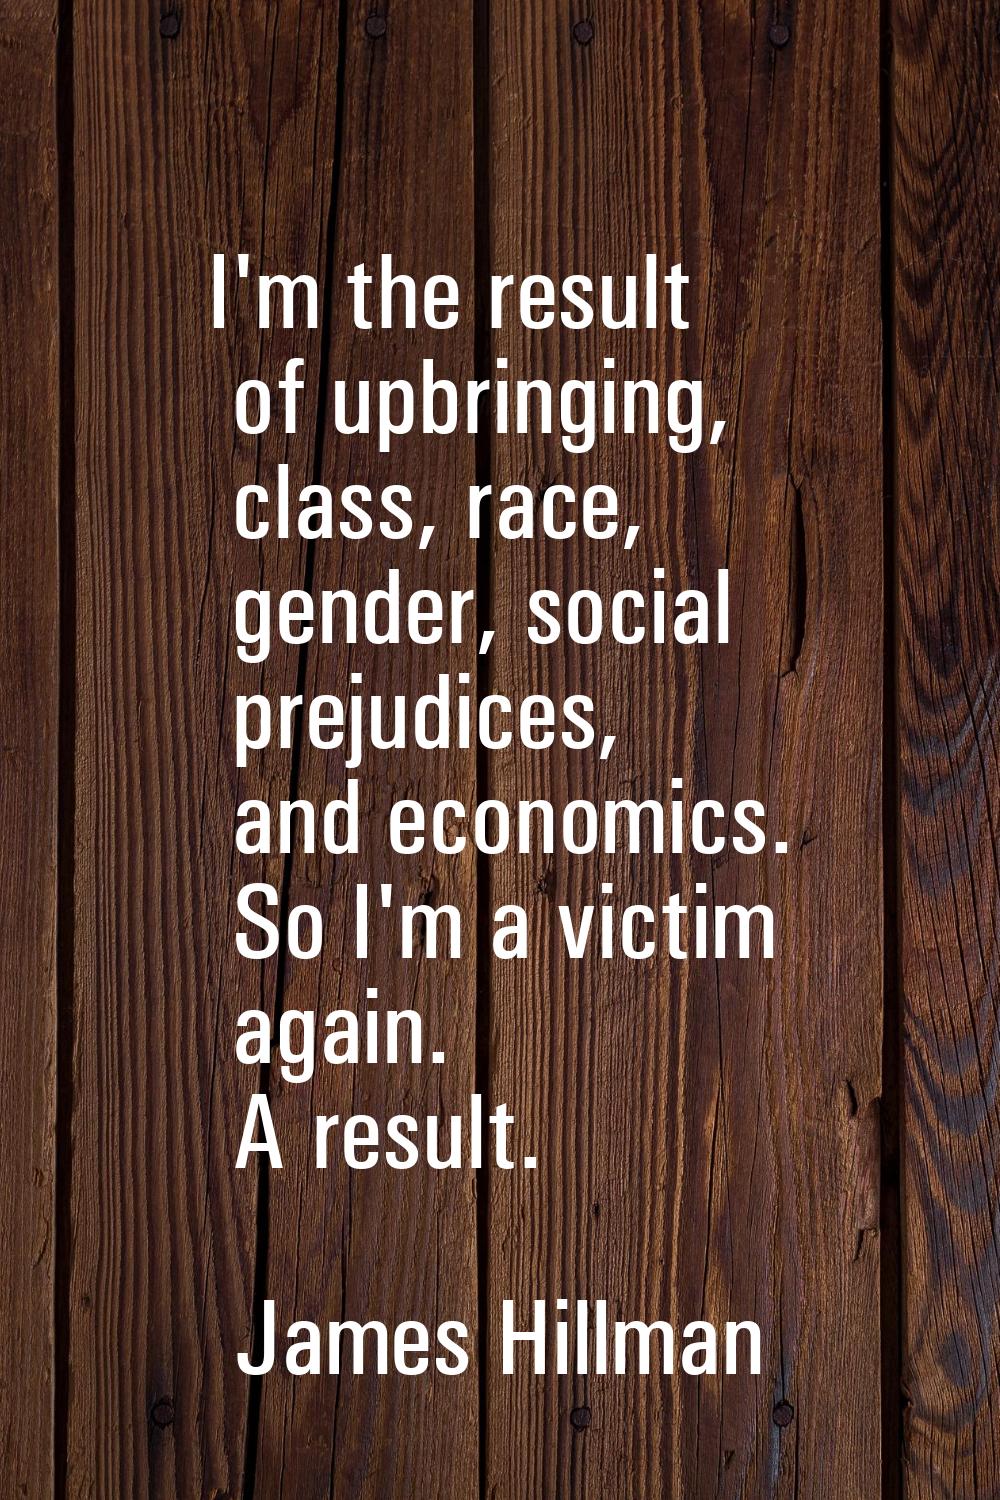 I'm the result of upbringing, class, race, gender, social prejudices, and economics. So I'm a victi